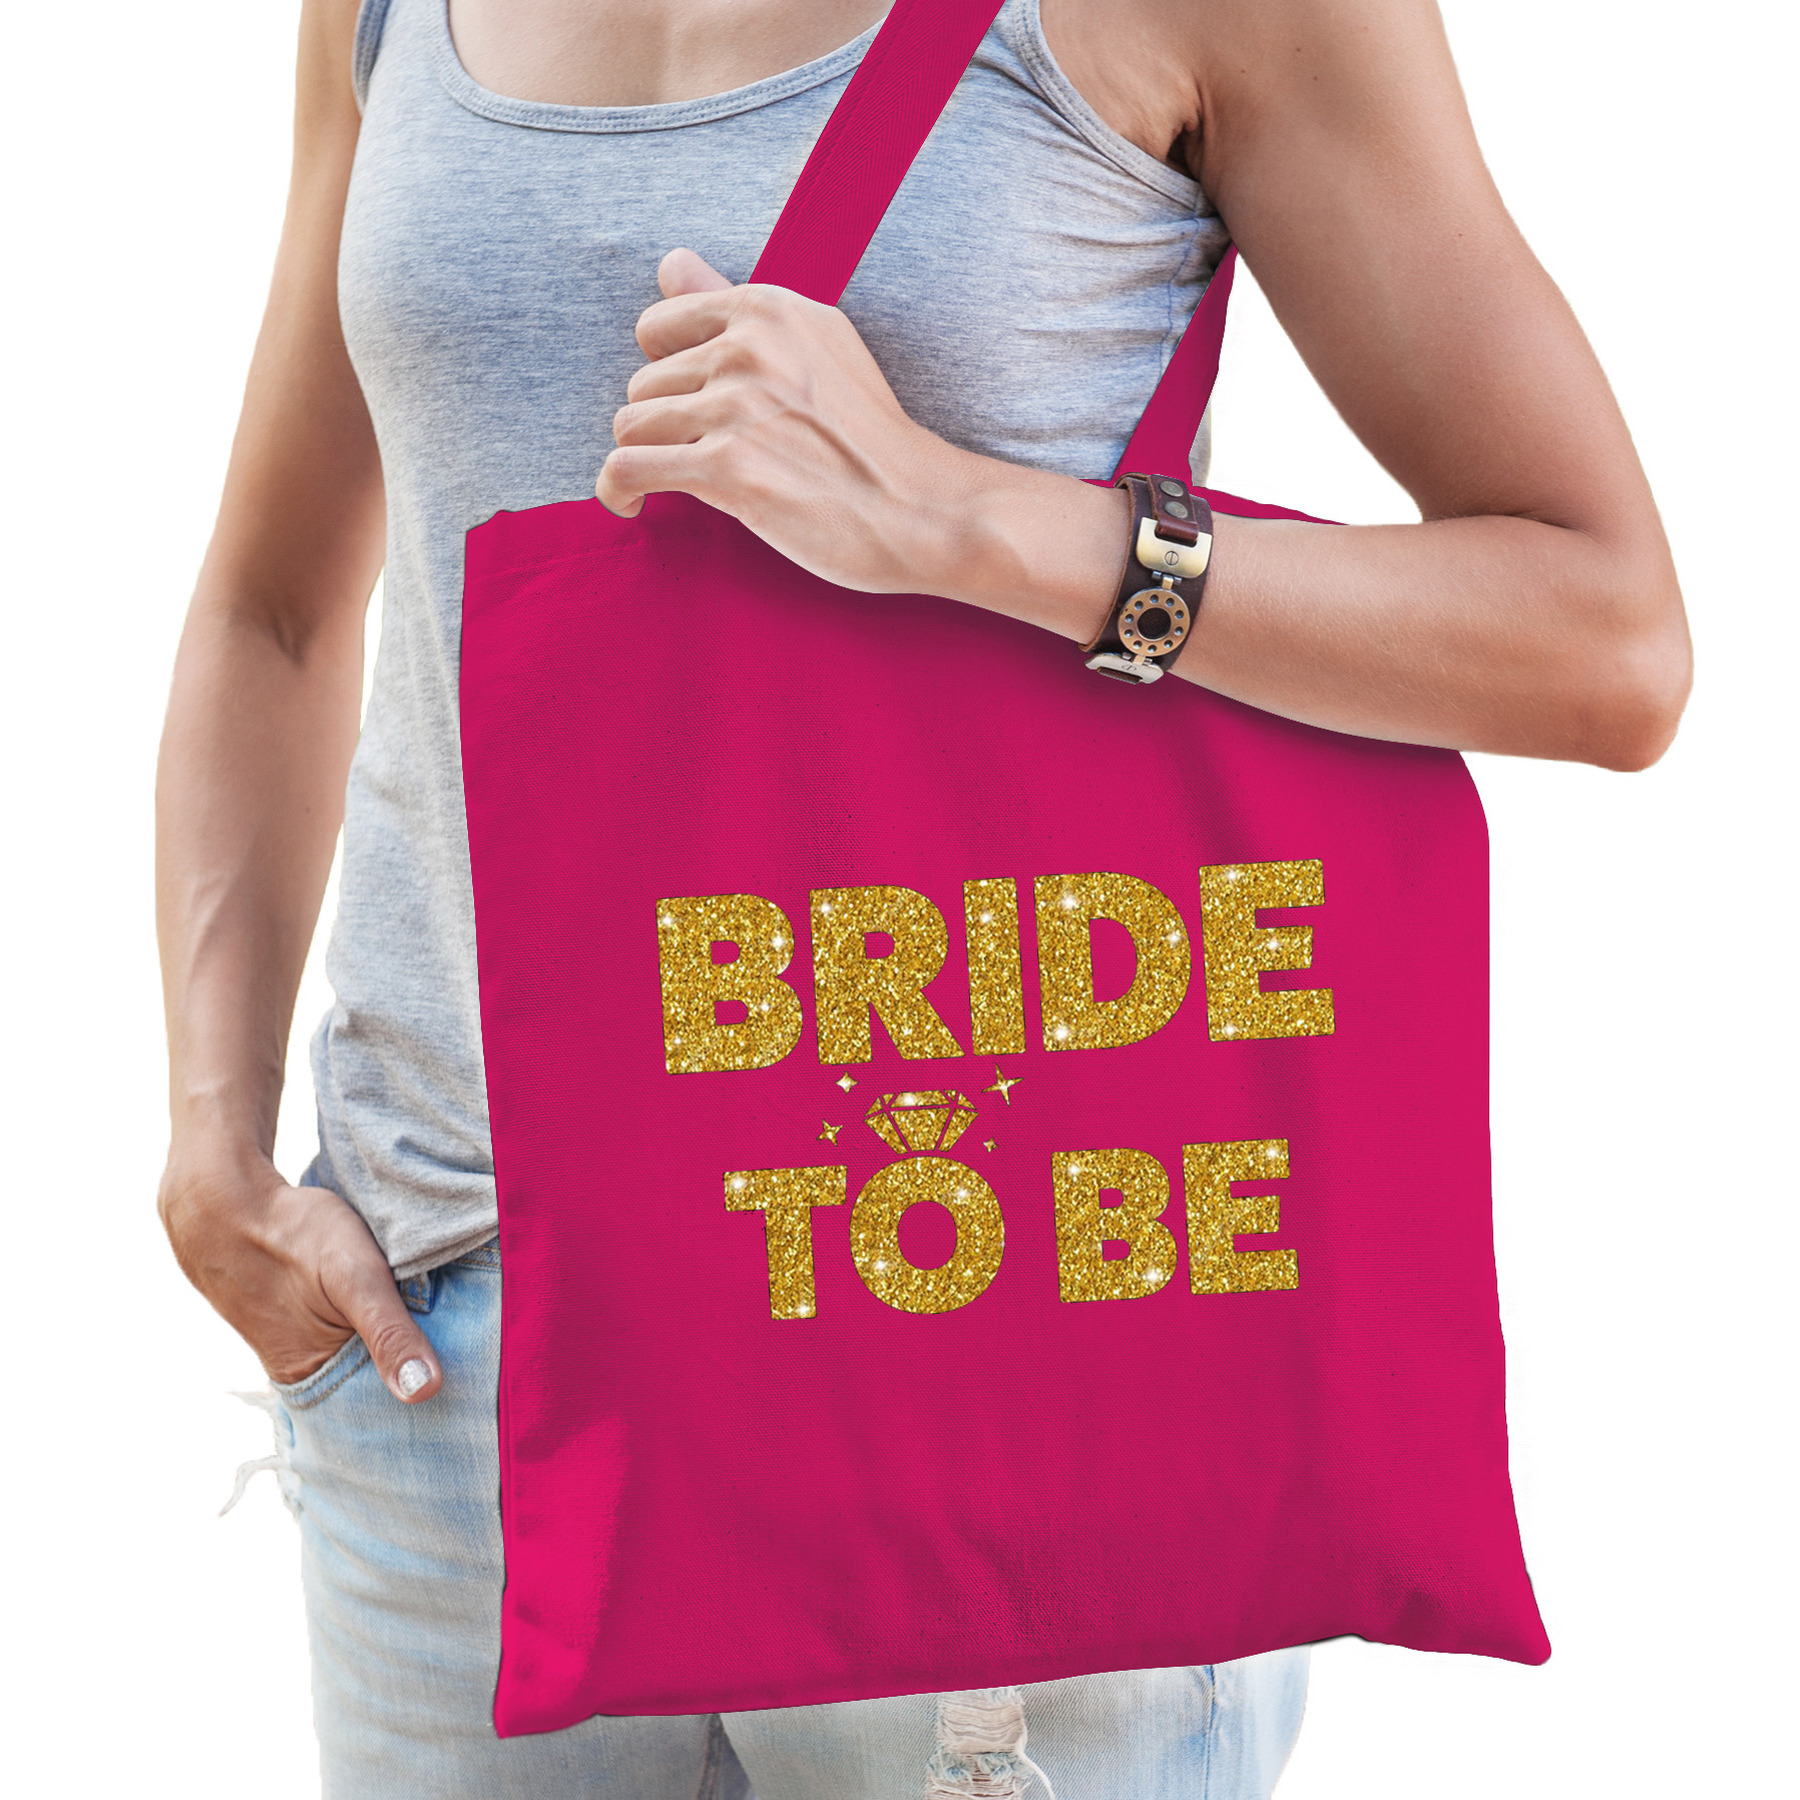 1x Bride Squad vrijgezellenfeest tasje roze goud/ goodiebag dames